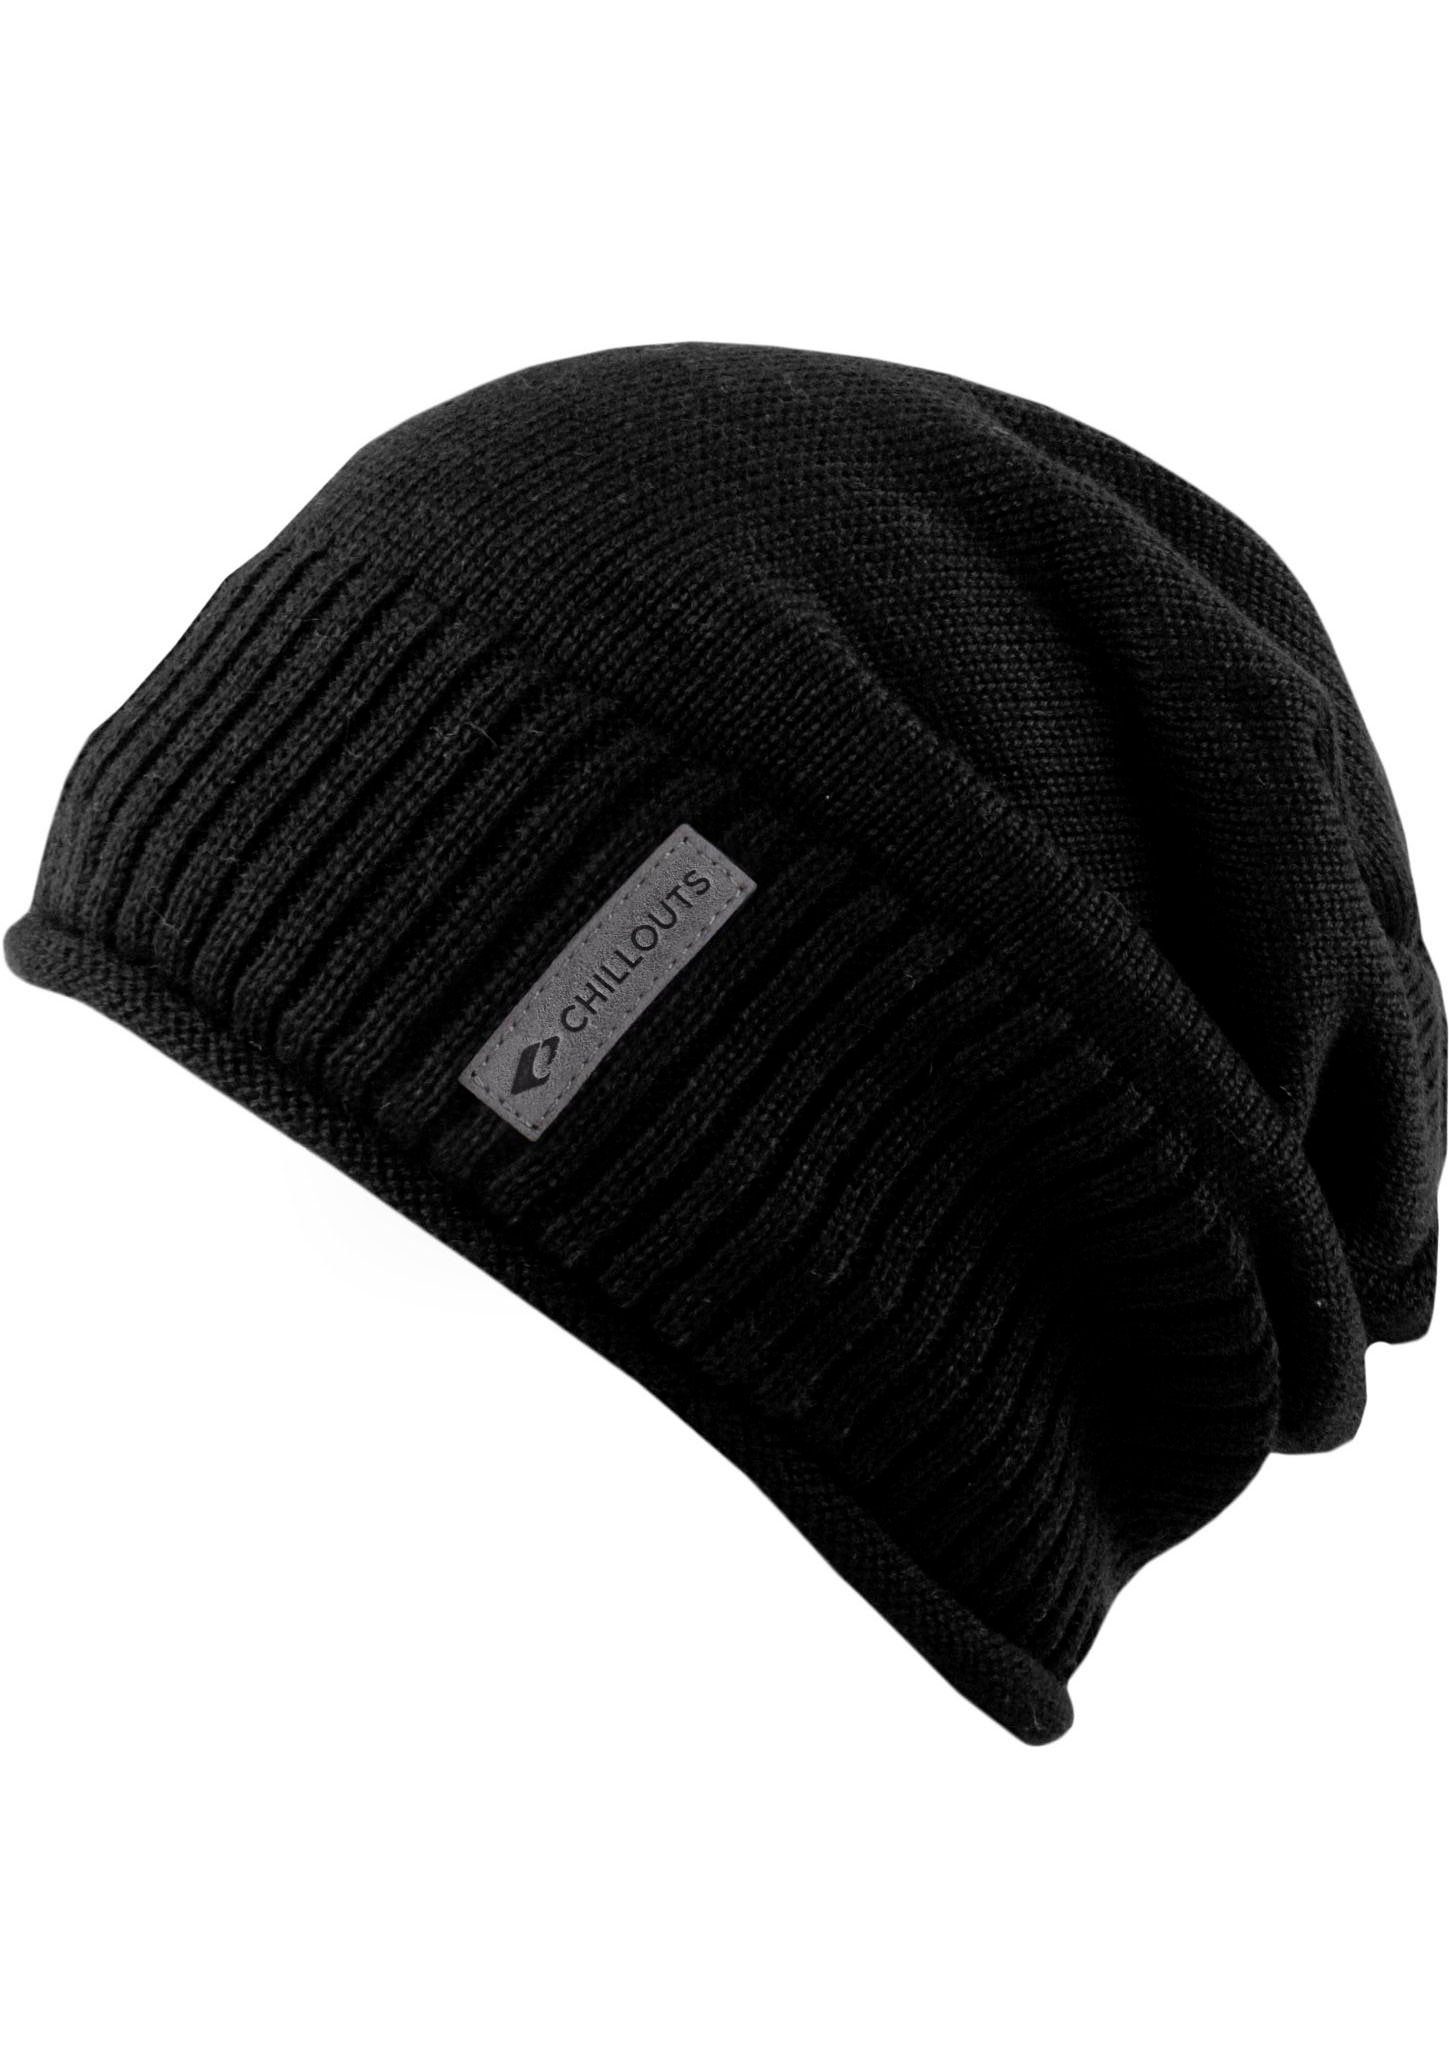 Etienne black chillouts Beanie Hat